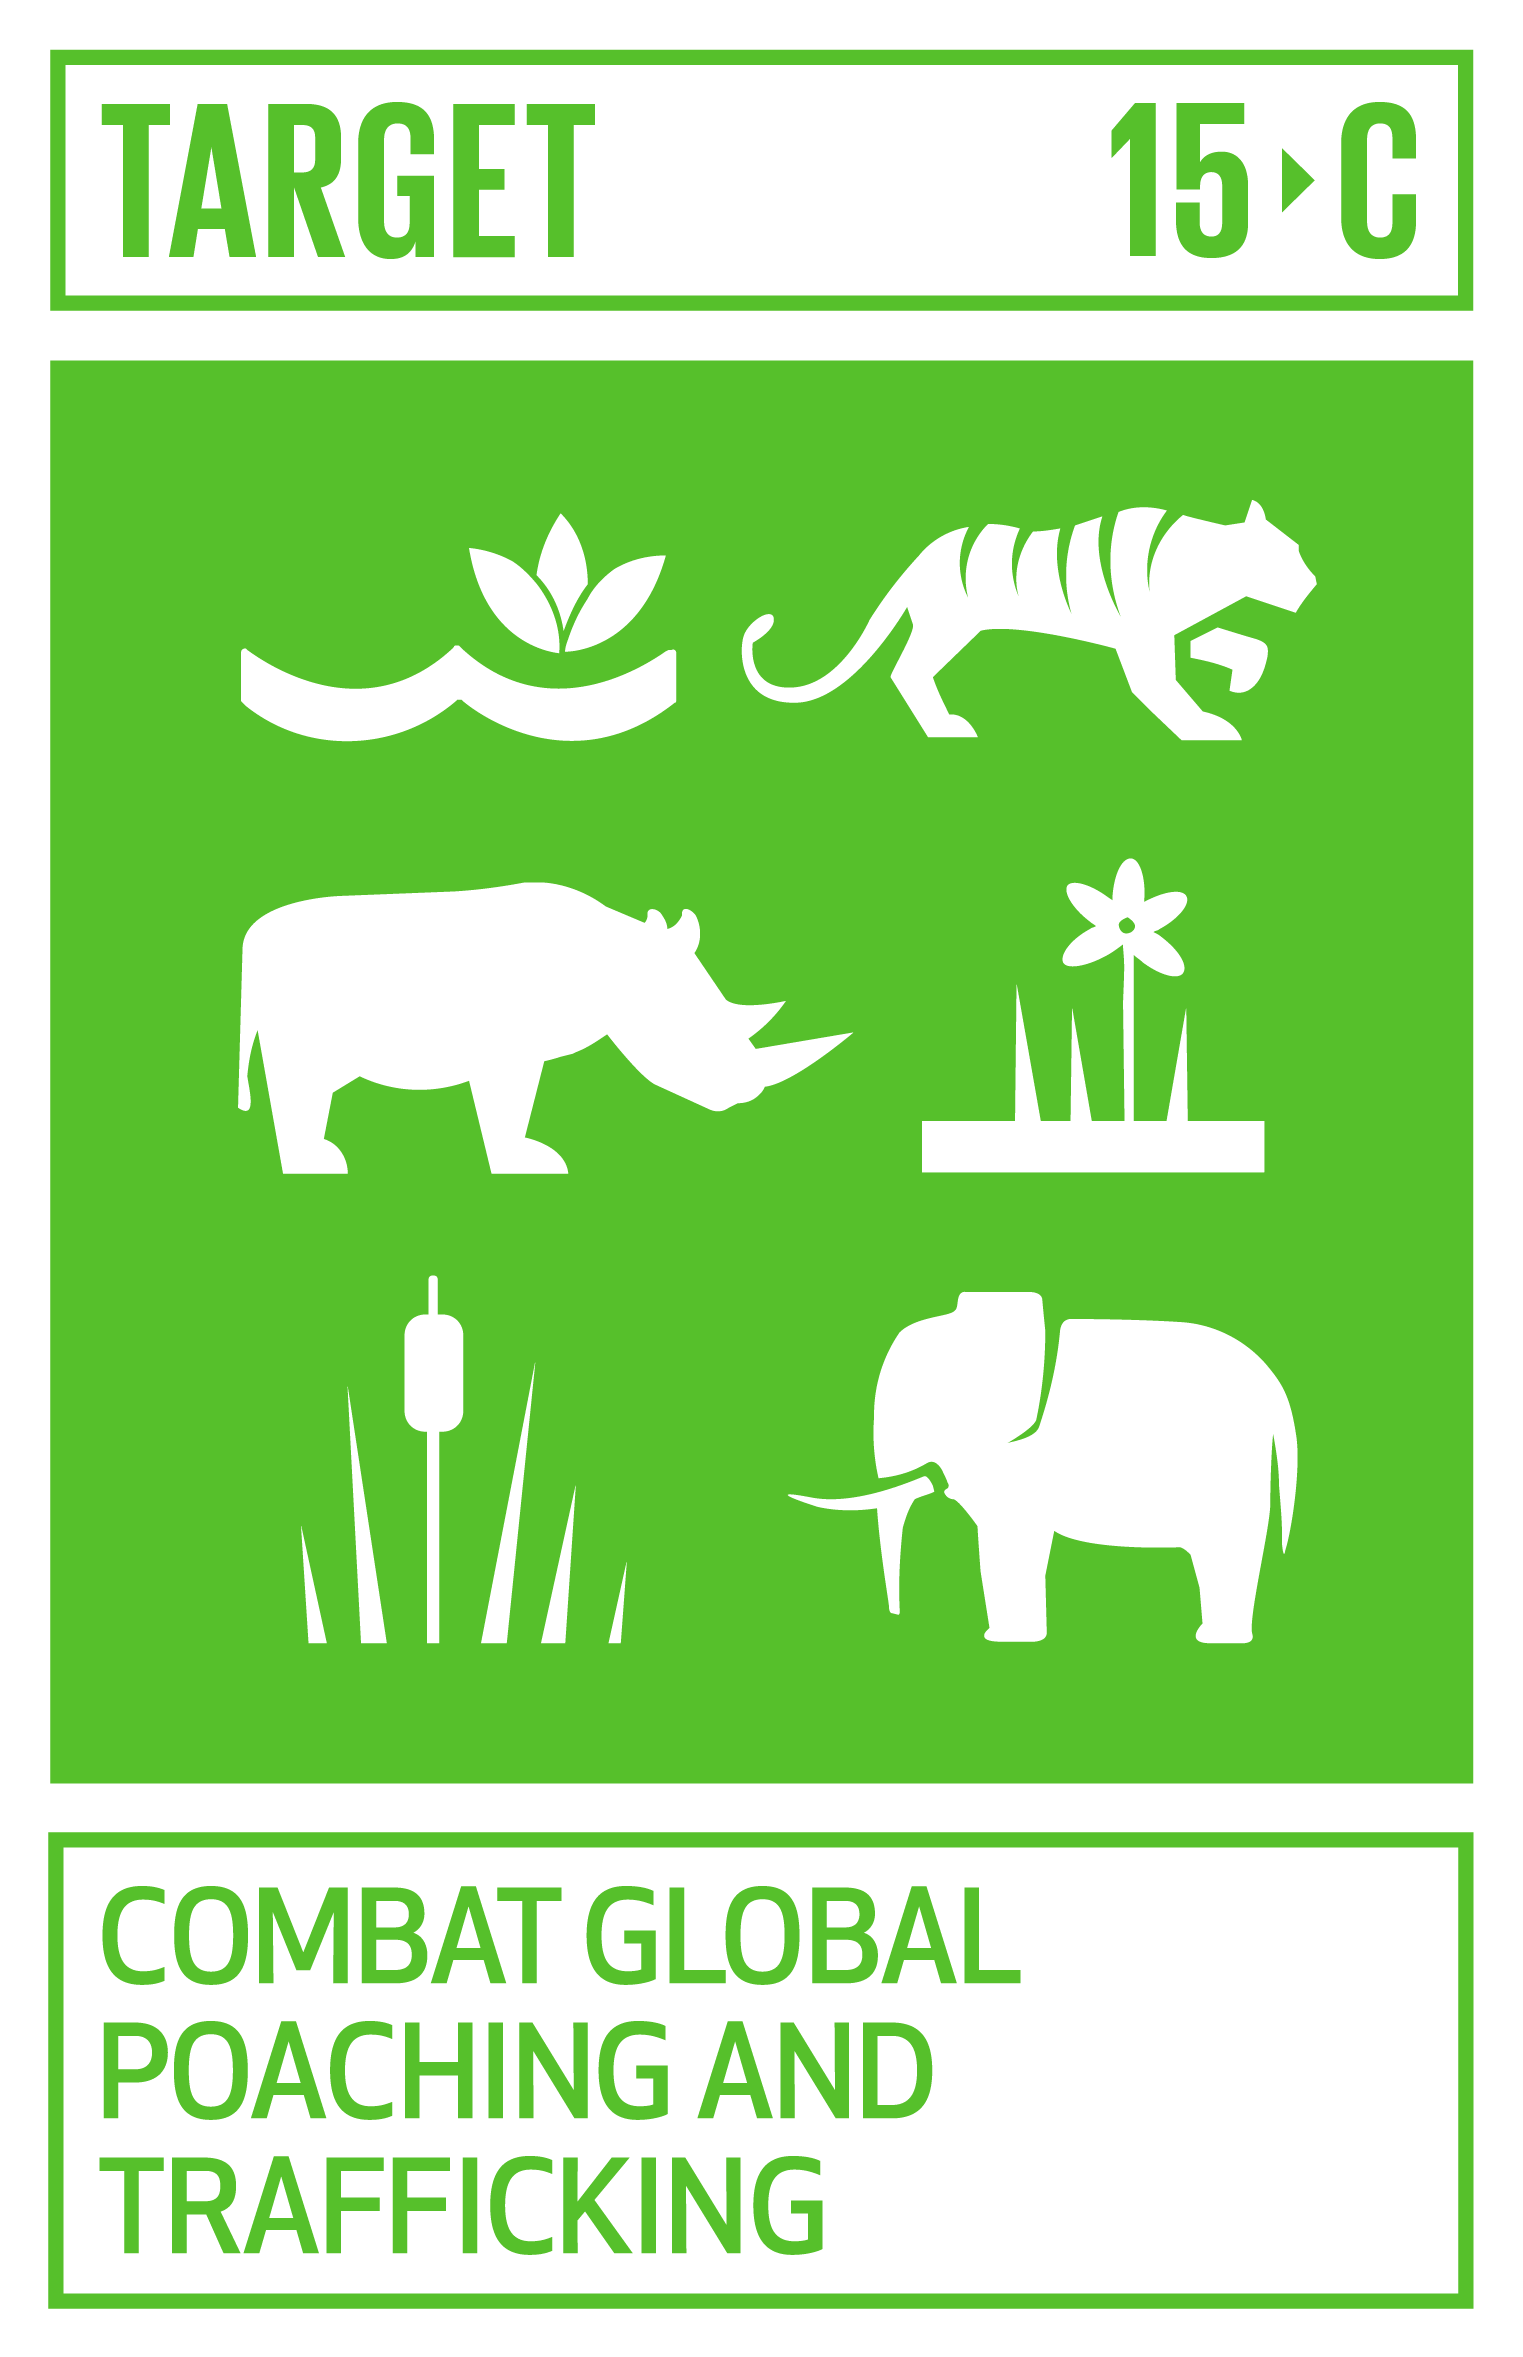 Goal,target,永續發展目標SDGs15,目標15.C打擊全球偷獵和販運